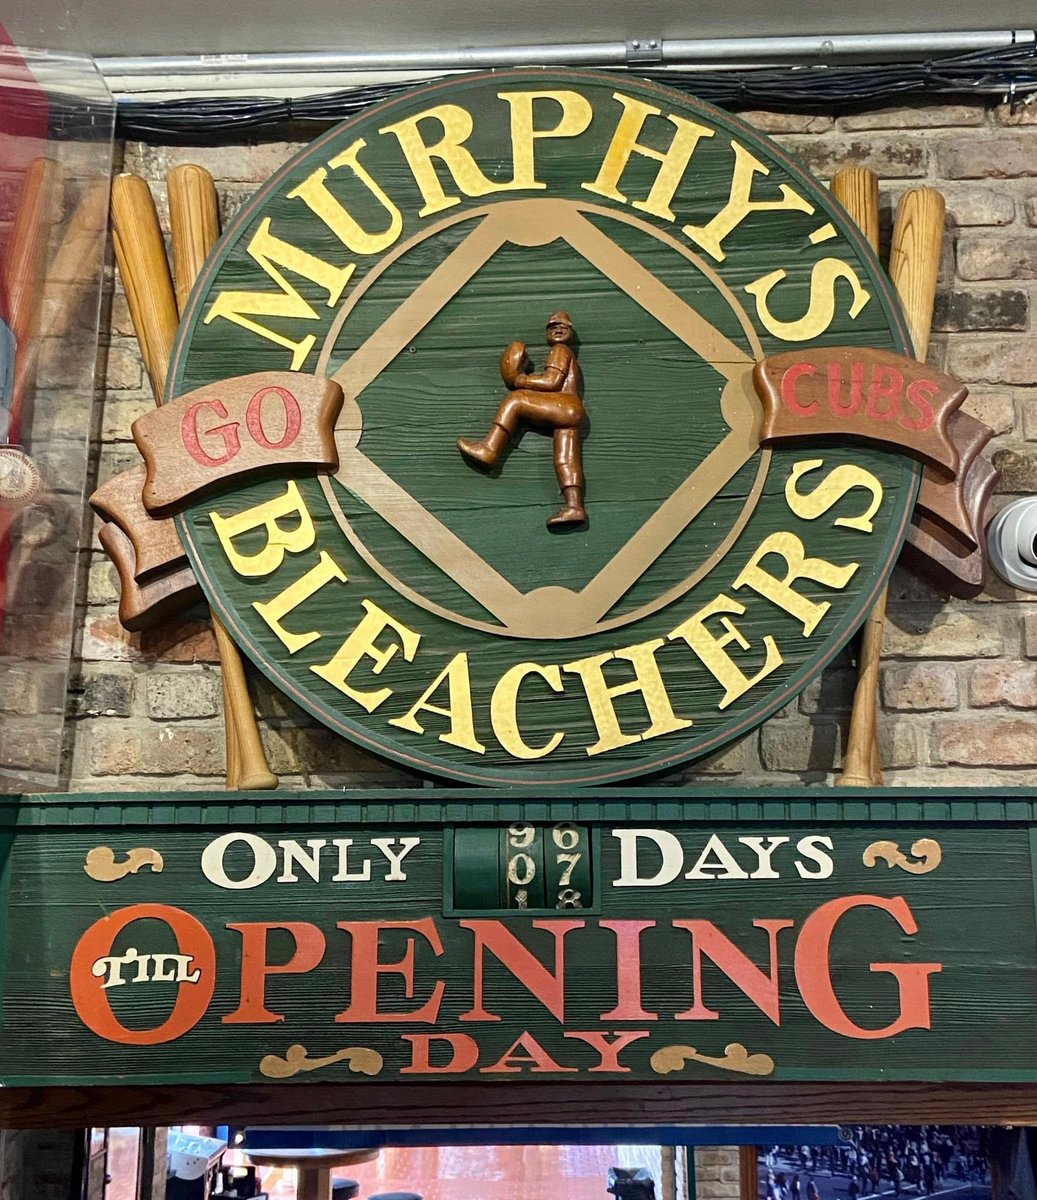 #murphys #murphysbleachers #Chicago #ChicagoCubs #cubsessed